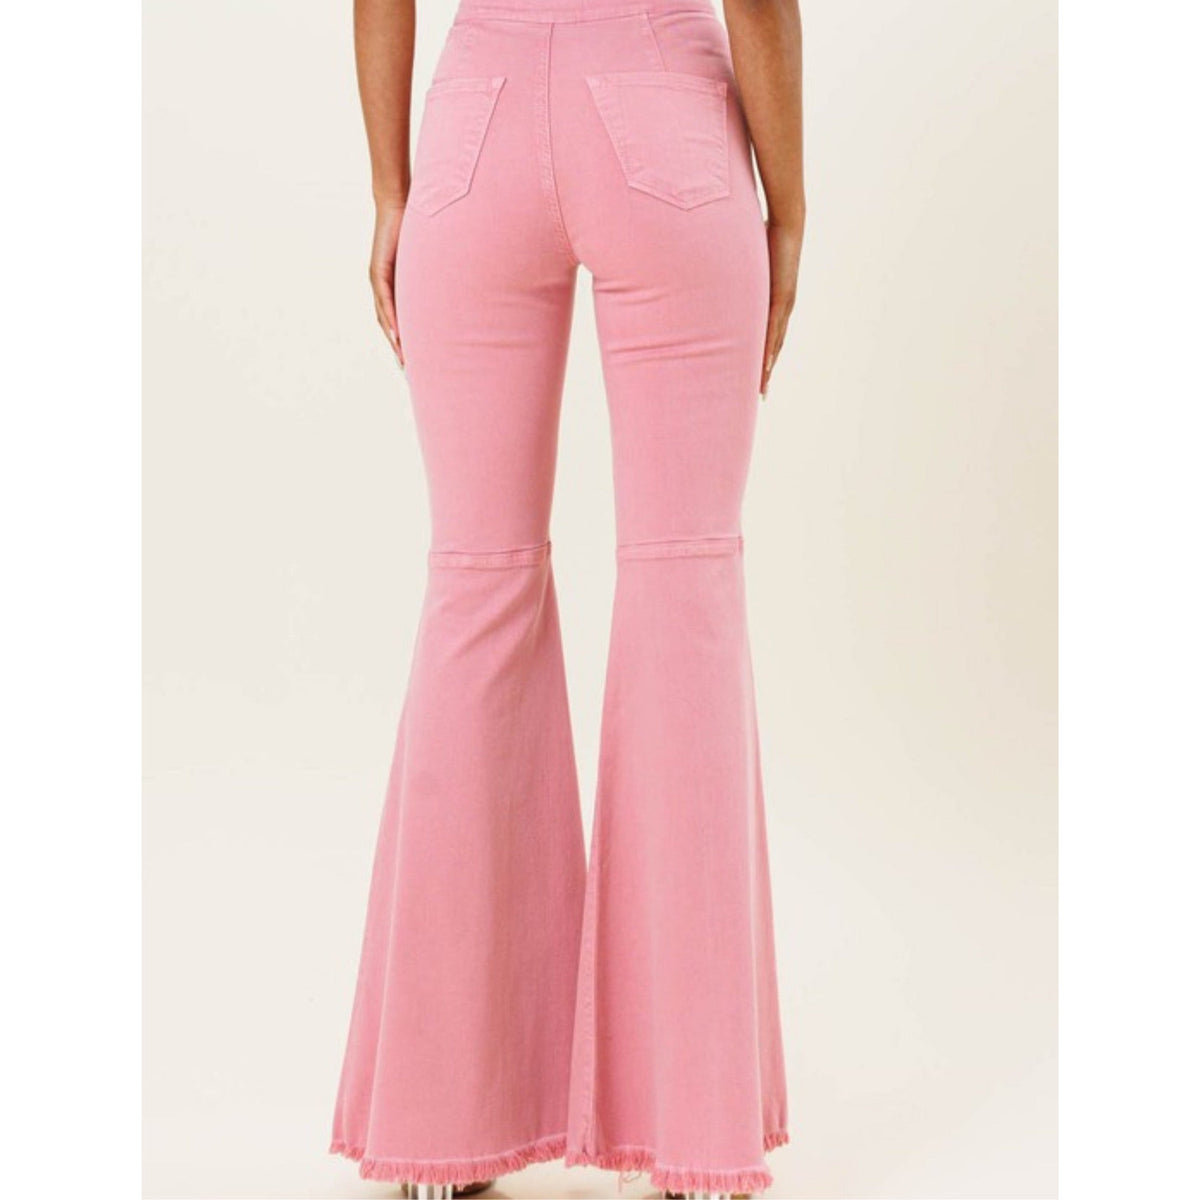 Blush pink soft denim flare bell jeans